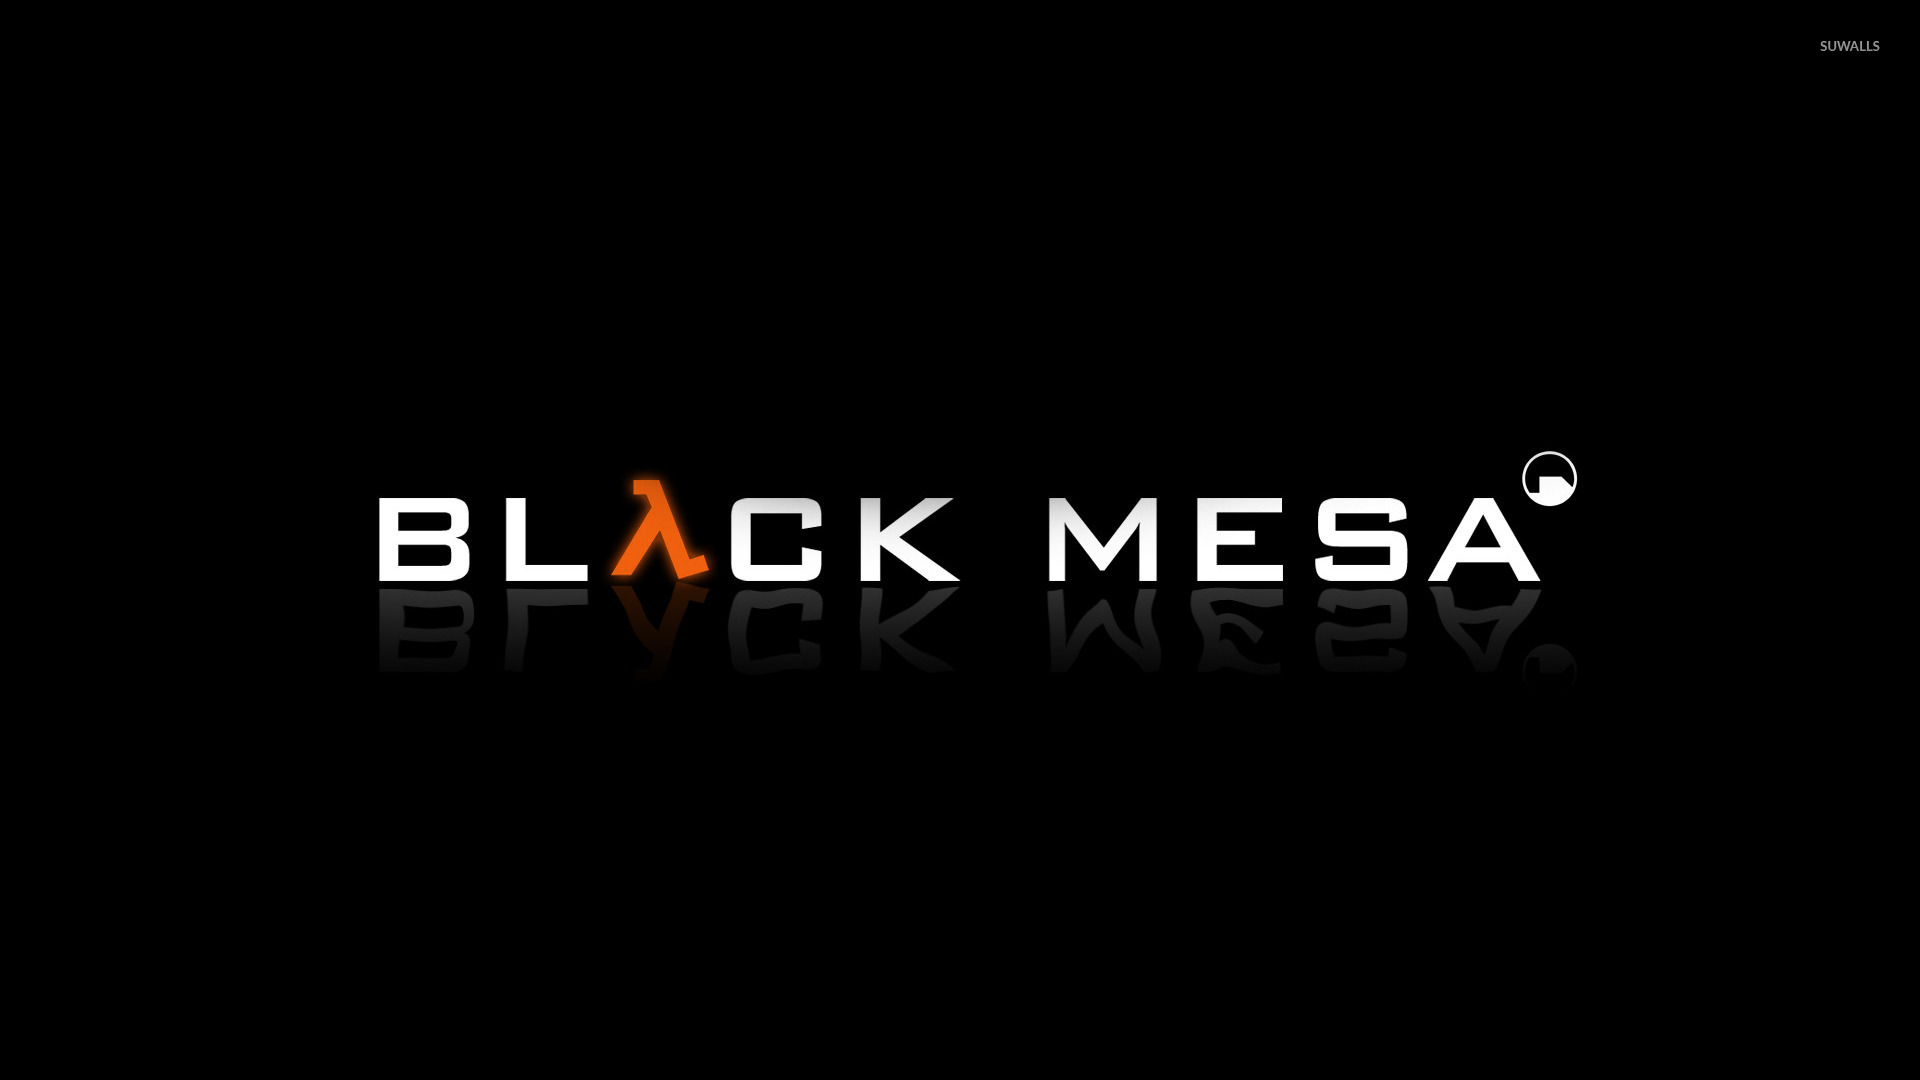 Black Mesa Wallpaper Game